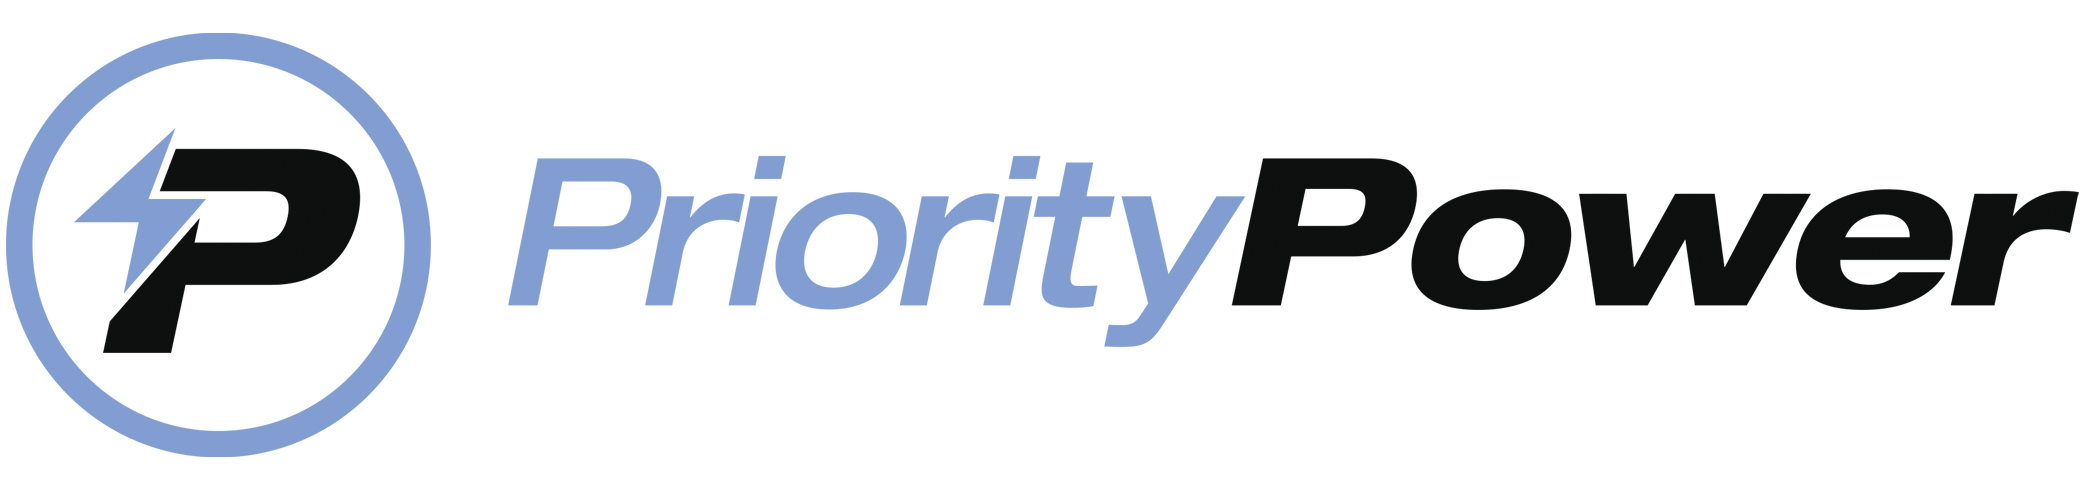 Priority Power logo